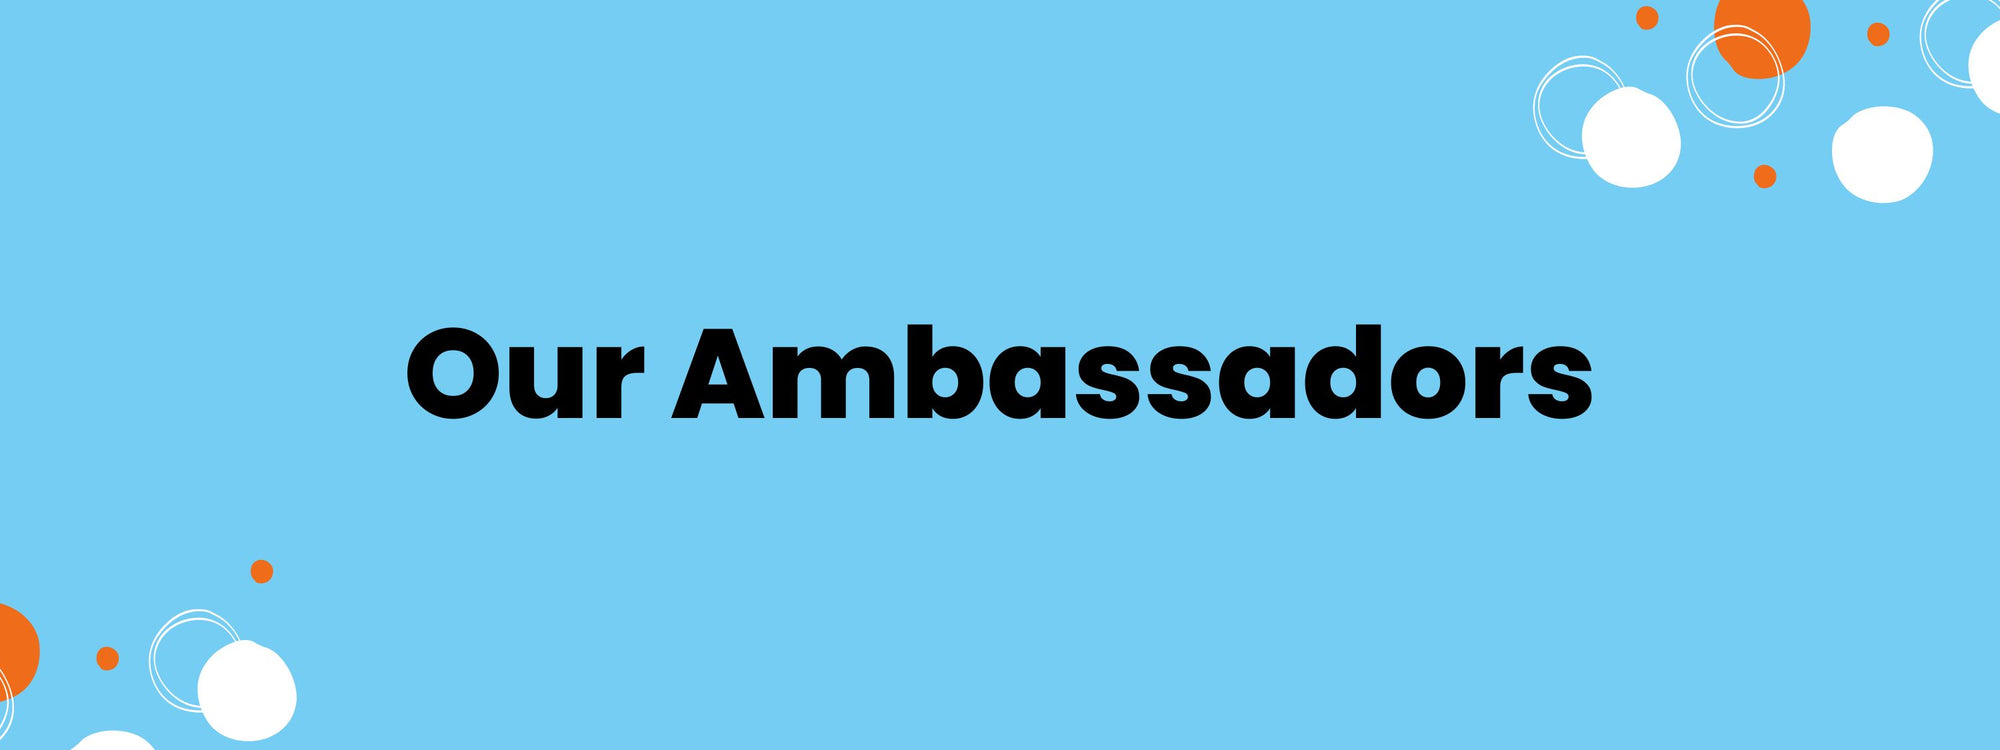 Our Ambassadors